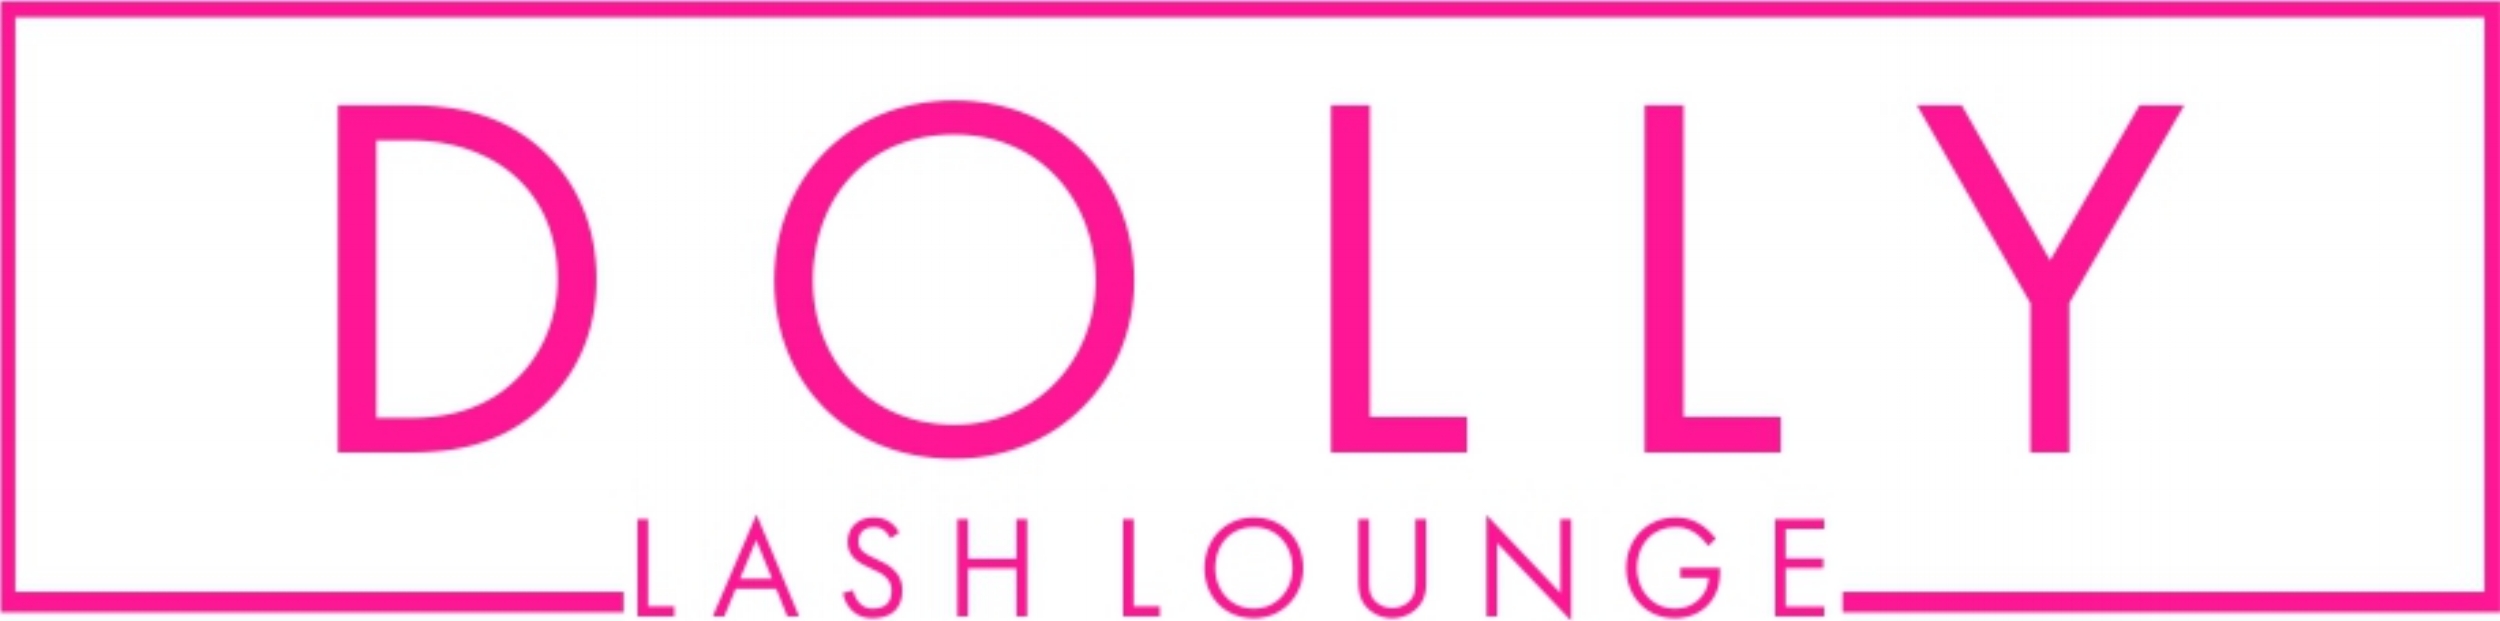 Dolly Lash Lounge - Eyelash Extensions Lash Lifts Eyebrows Microblading Teeth Whitening